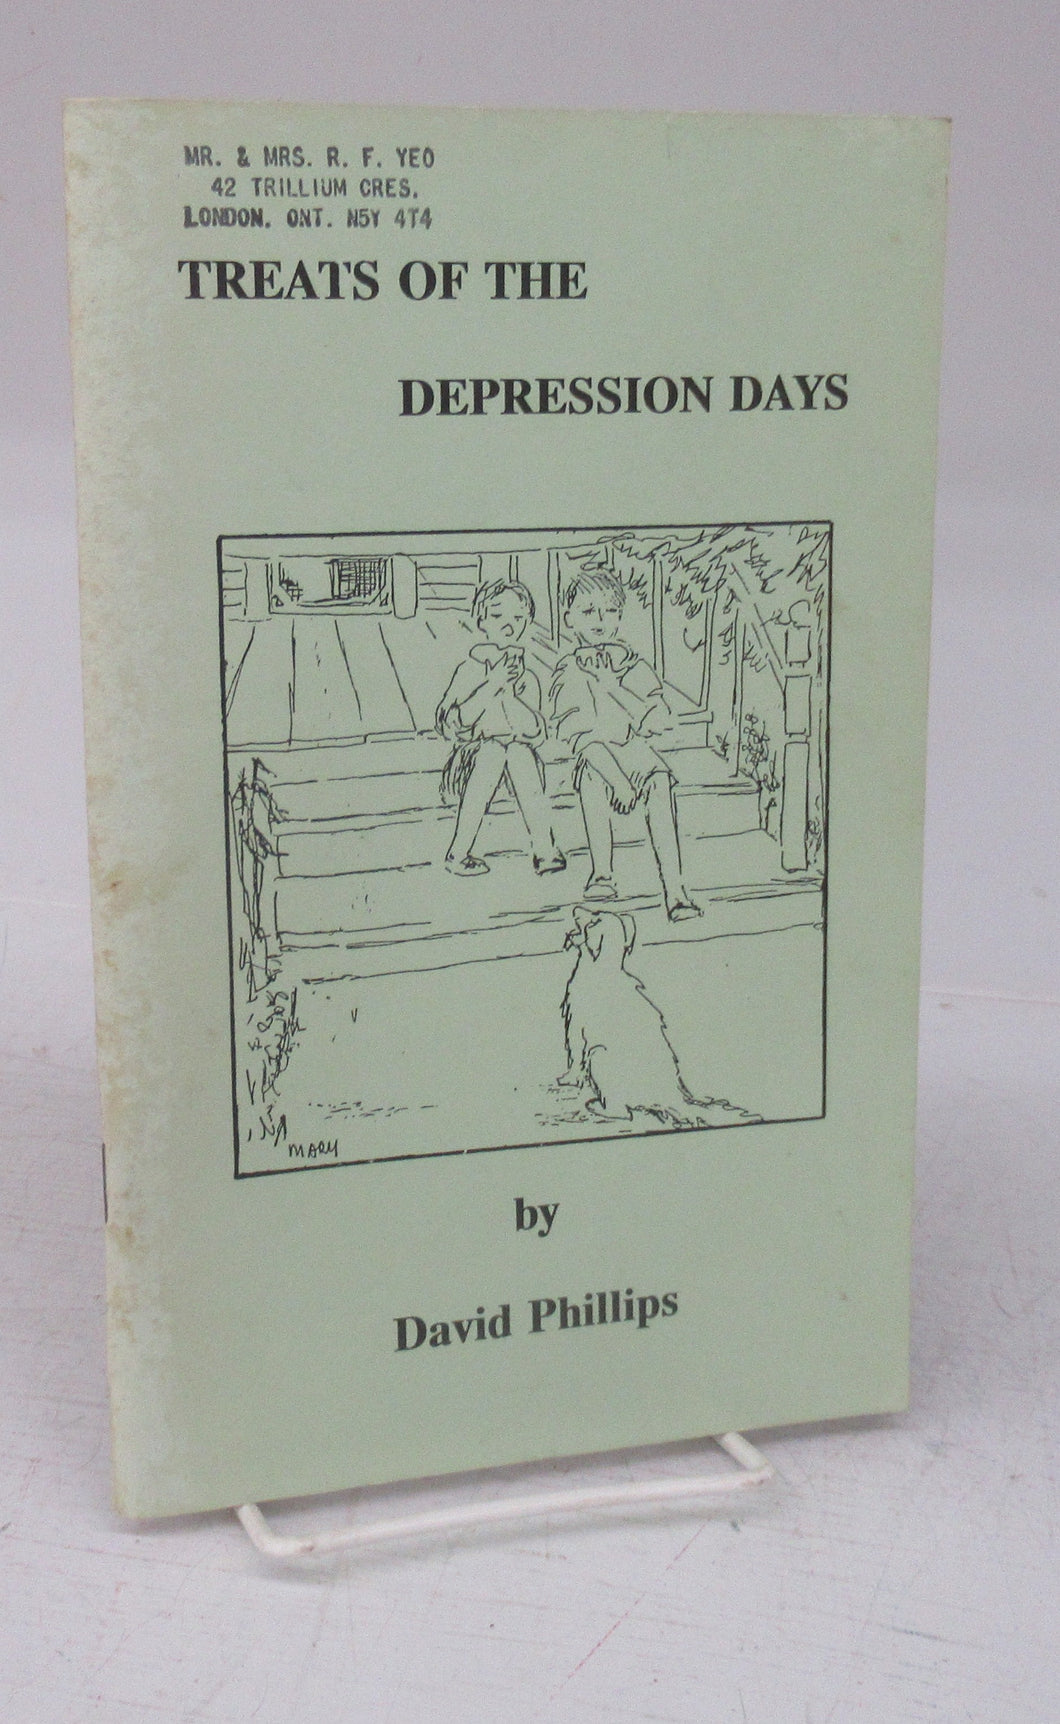 Treats of the Depression Days